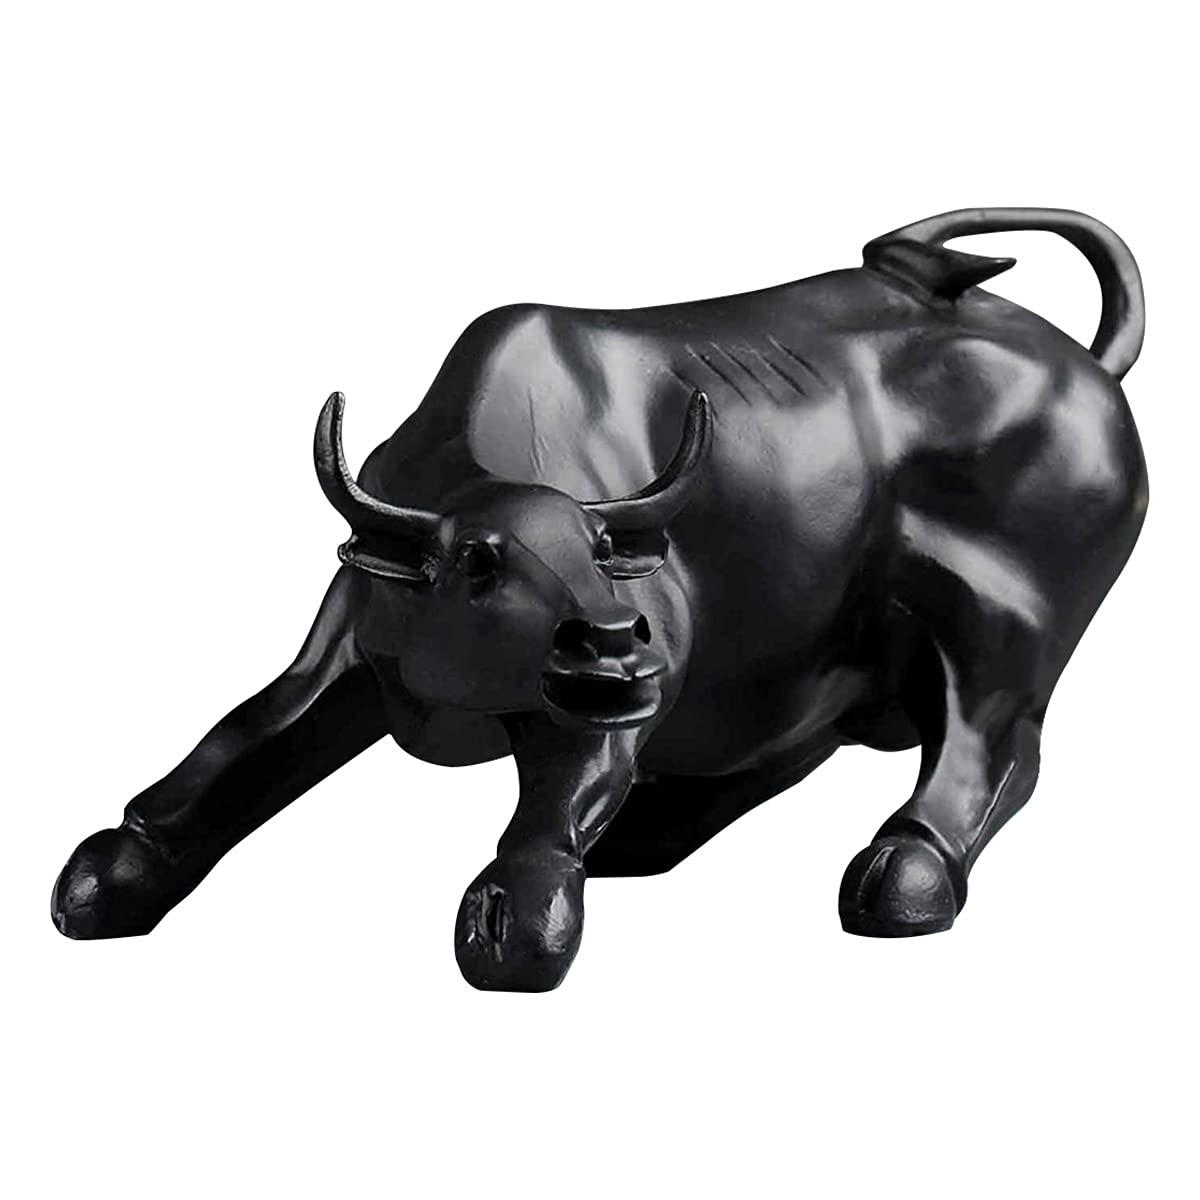 Geometric Bull Resin Statue Home Decor for Gift Items I Stock Market I Wall Street Charging Bull I (10", Black), 1 Piece - Decorwala